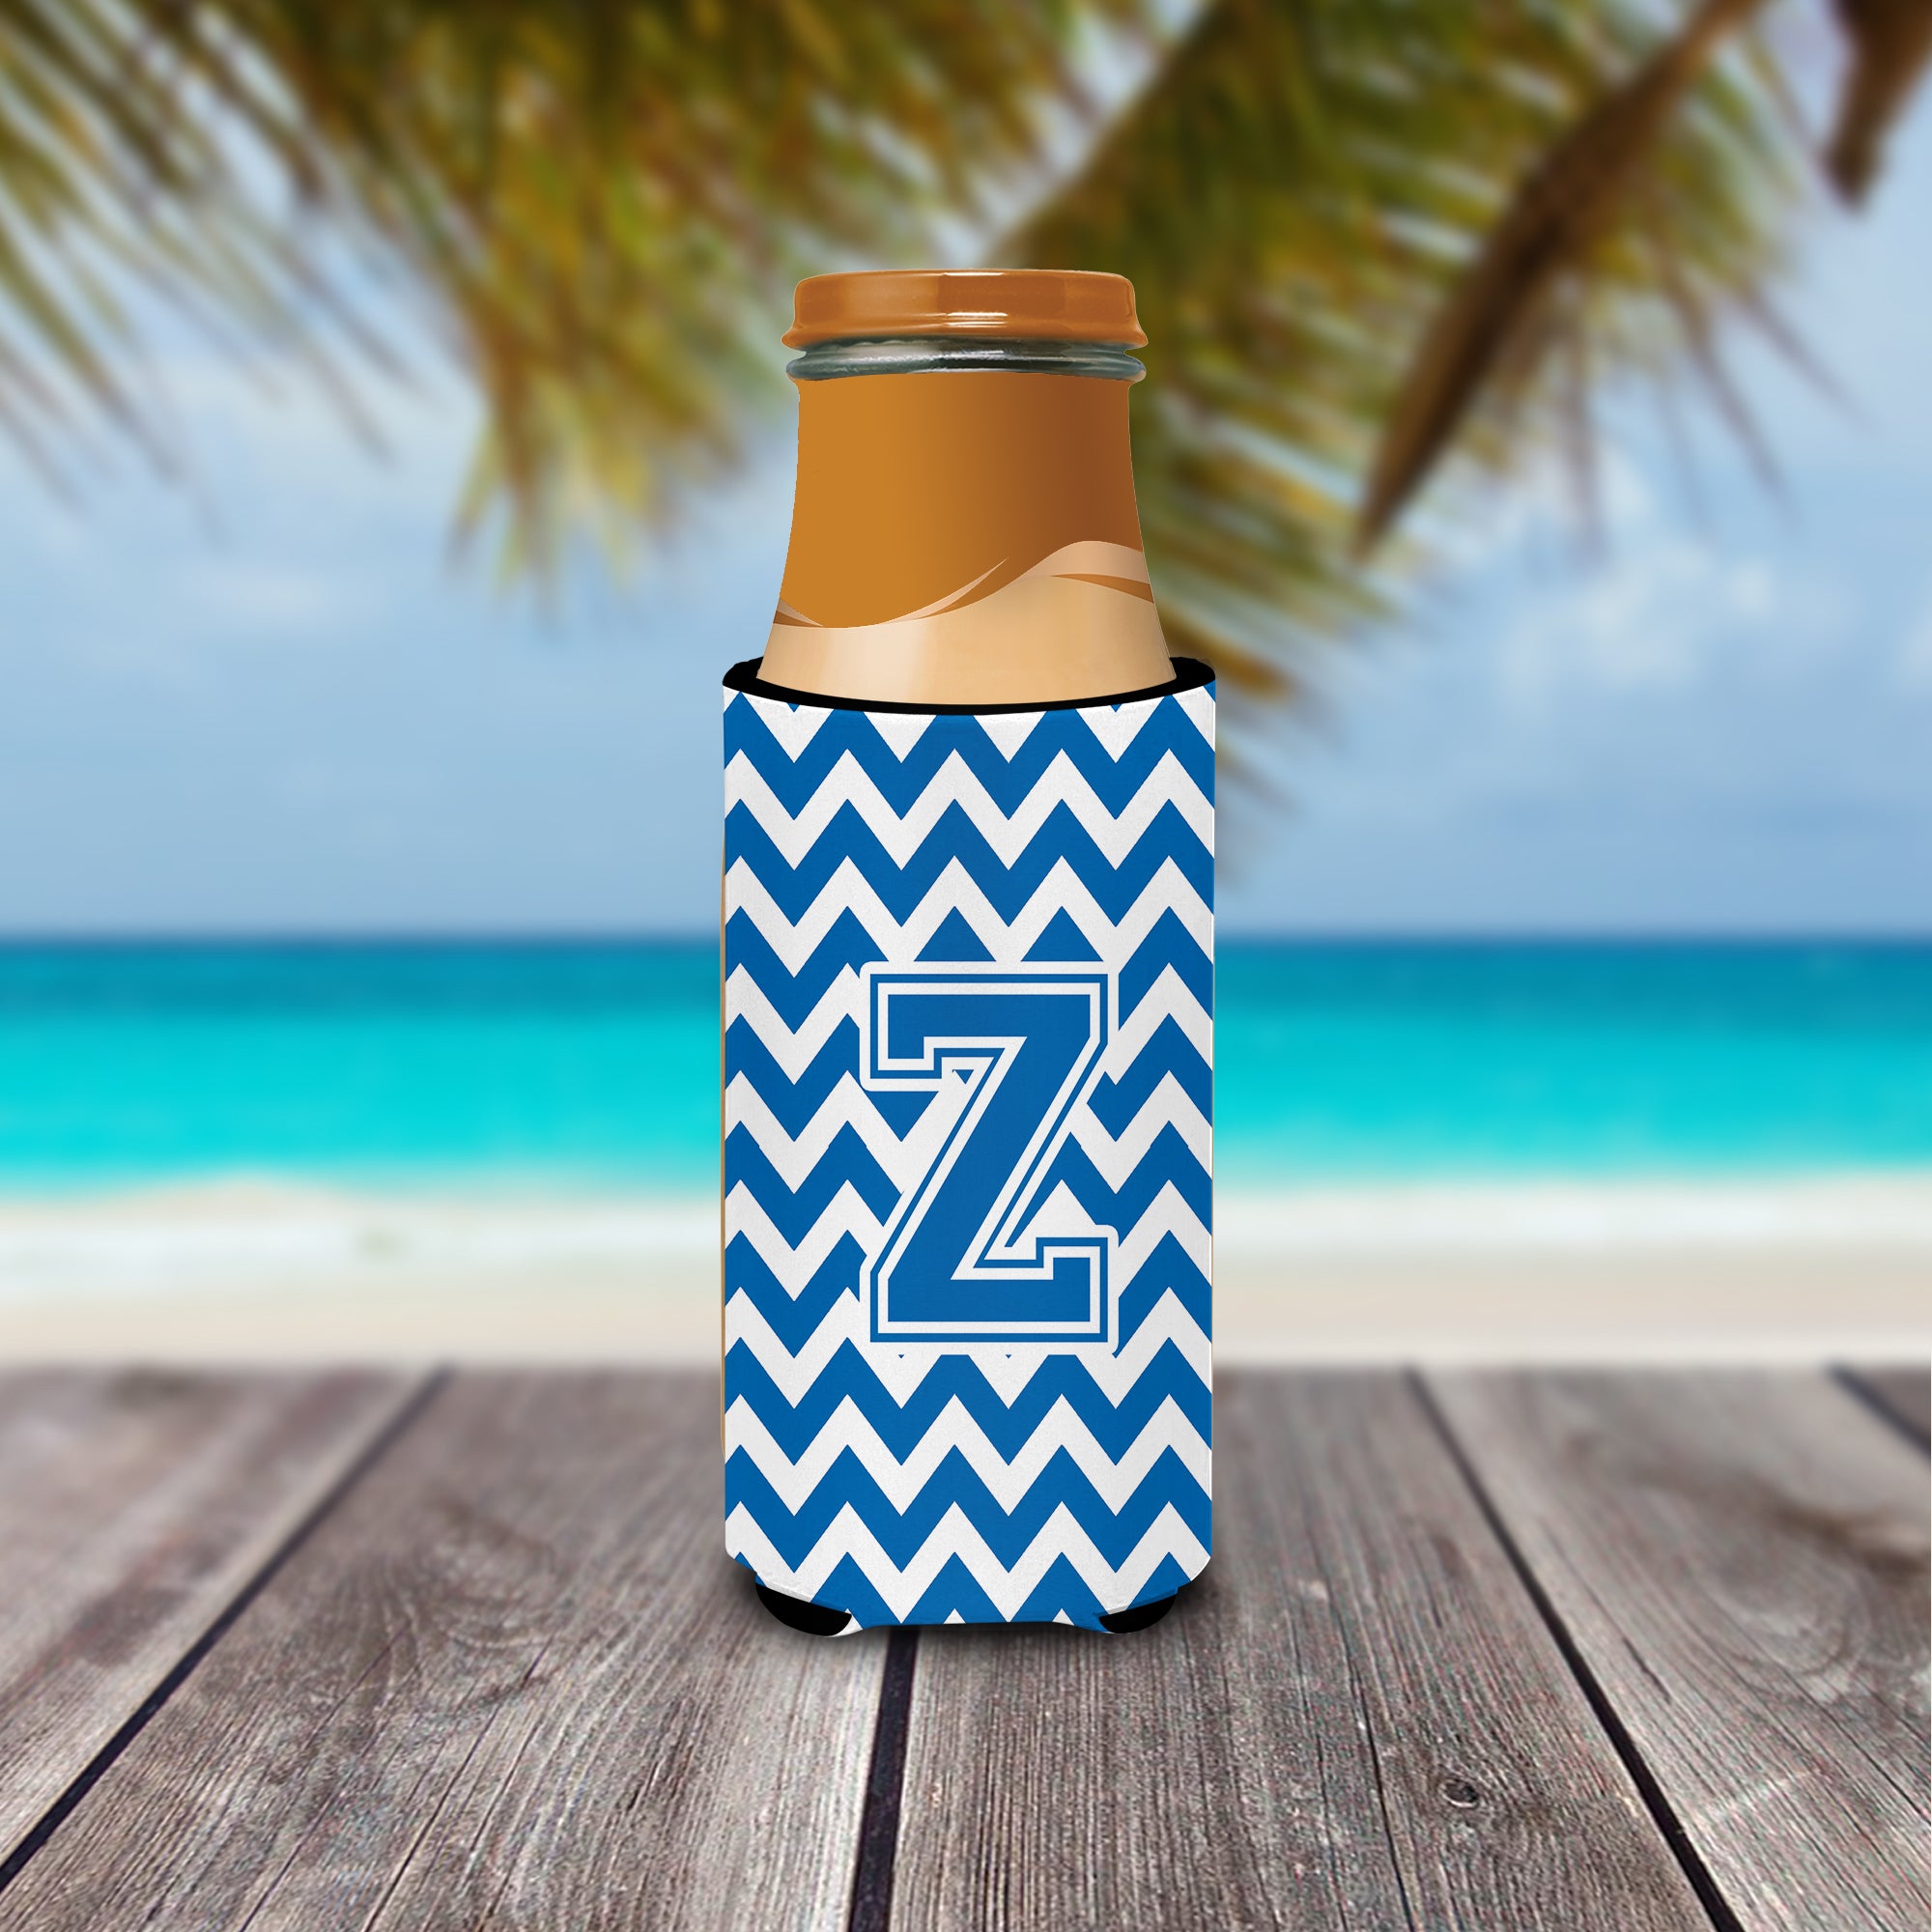 Letter Z Chevron Blue and White Ultra Beverage Insulators for slim cans CJ1056-ZMUK